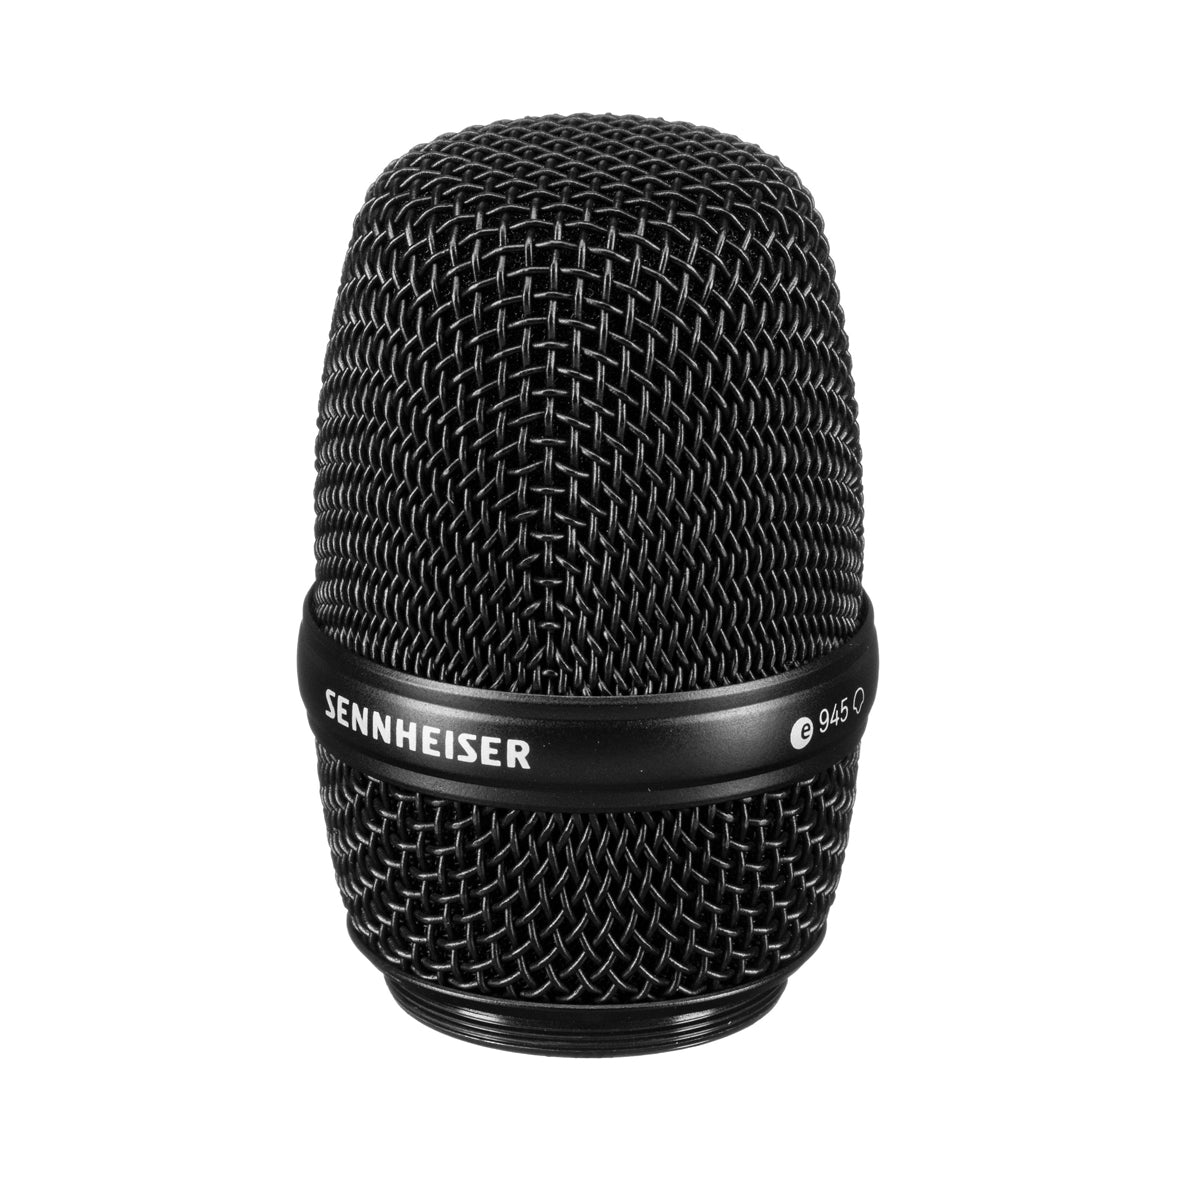 Sennheiser MMD 945-1 BK Dynamic Super Cardioid Microphone Module, Black